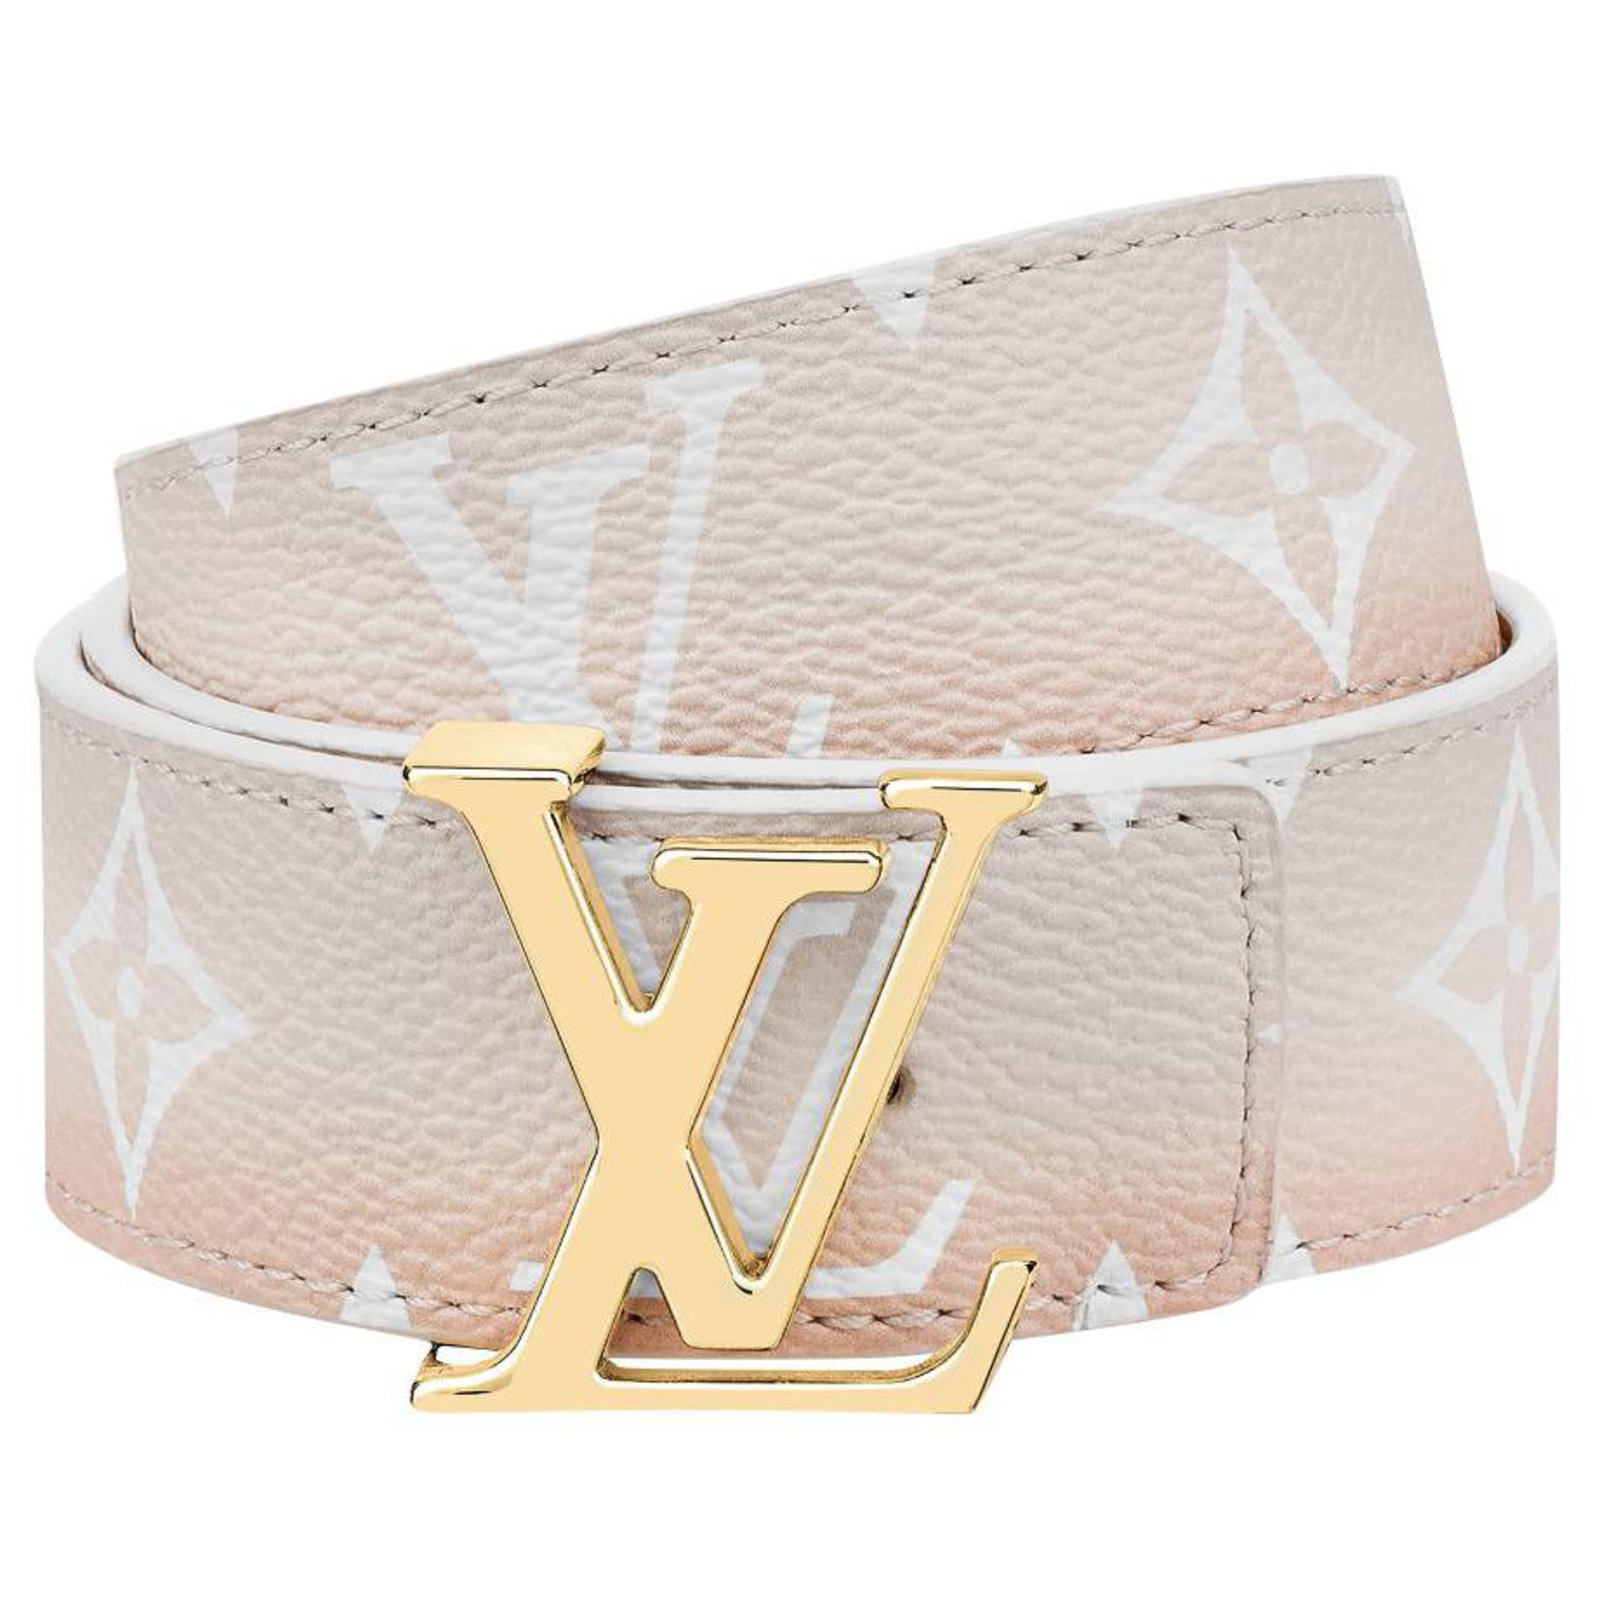 Cintura LV Louis Vuitton originale in pelle Epi color crema Crudo